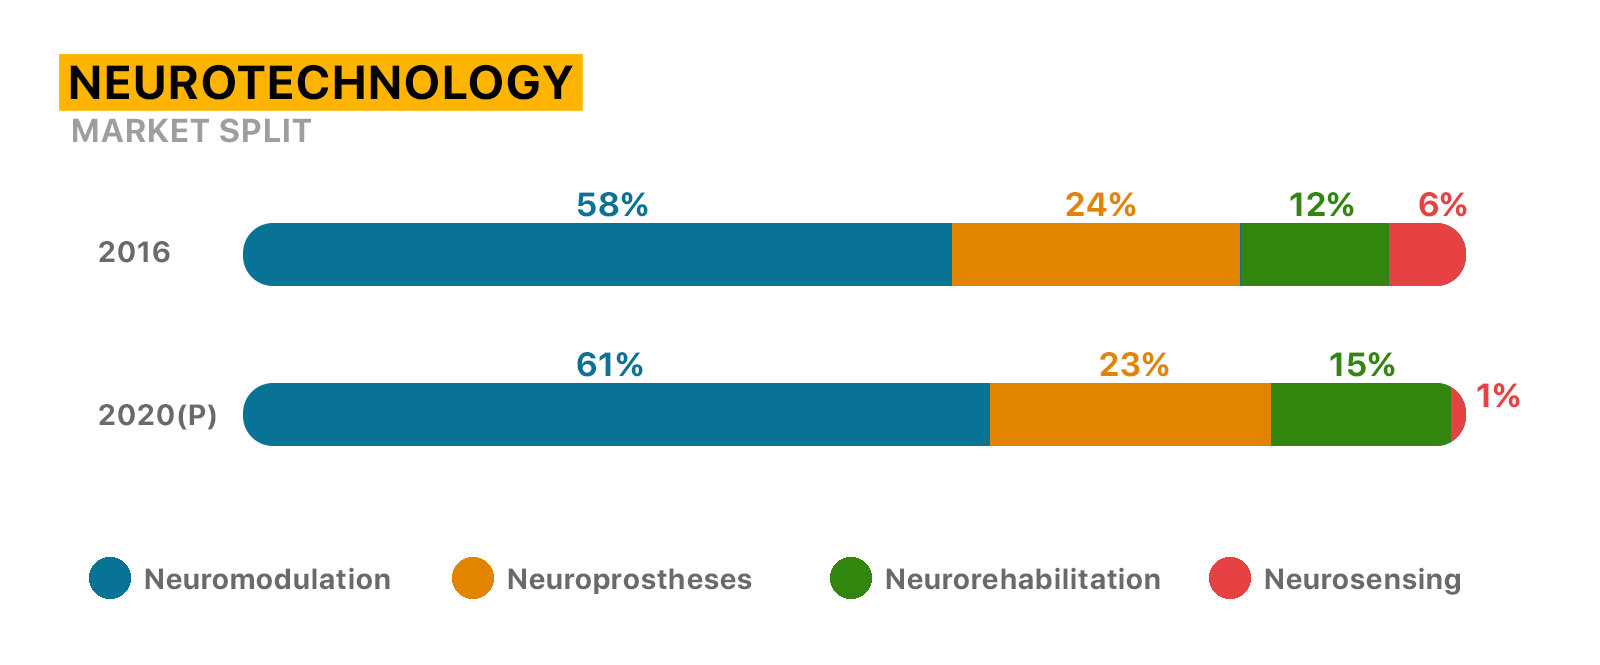 Neurotechnology market split